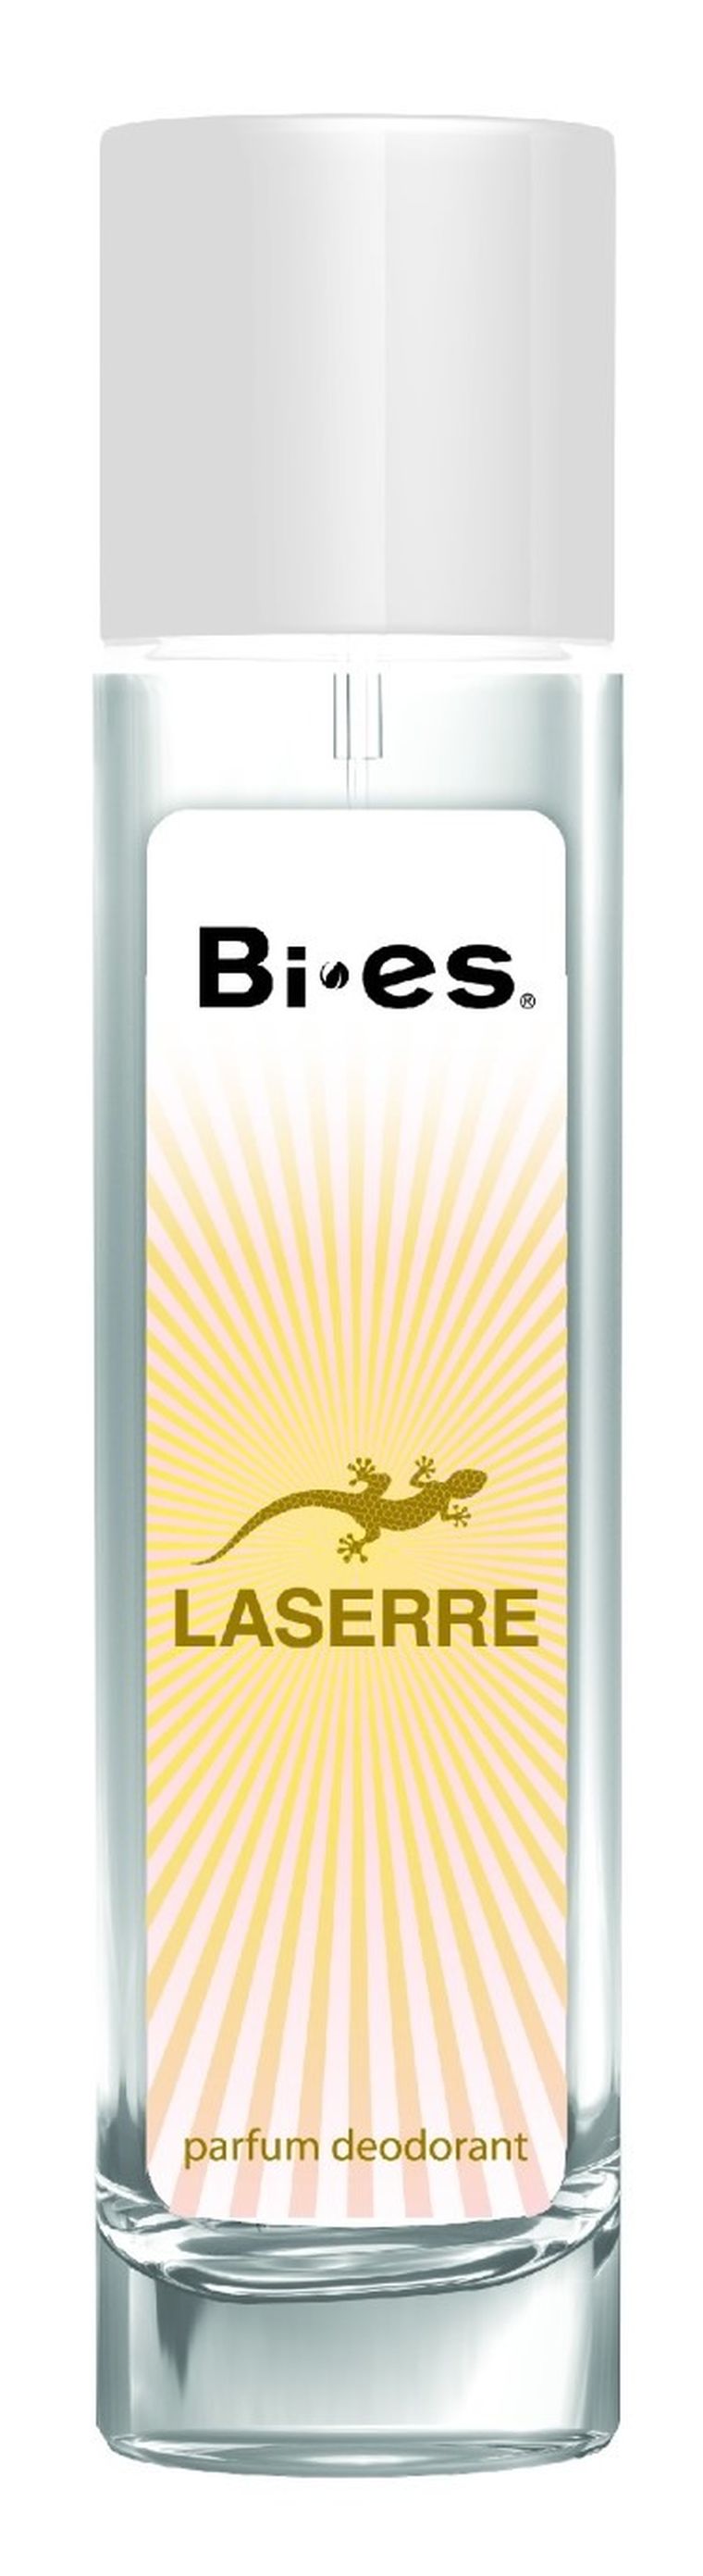 bi-es laserre dezodorant w sprayu 75 ml   